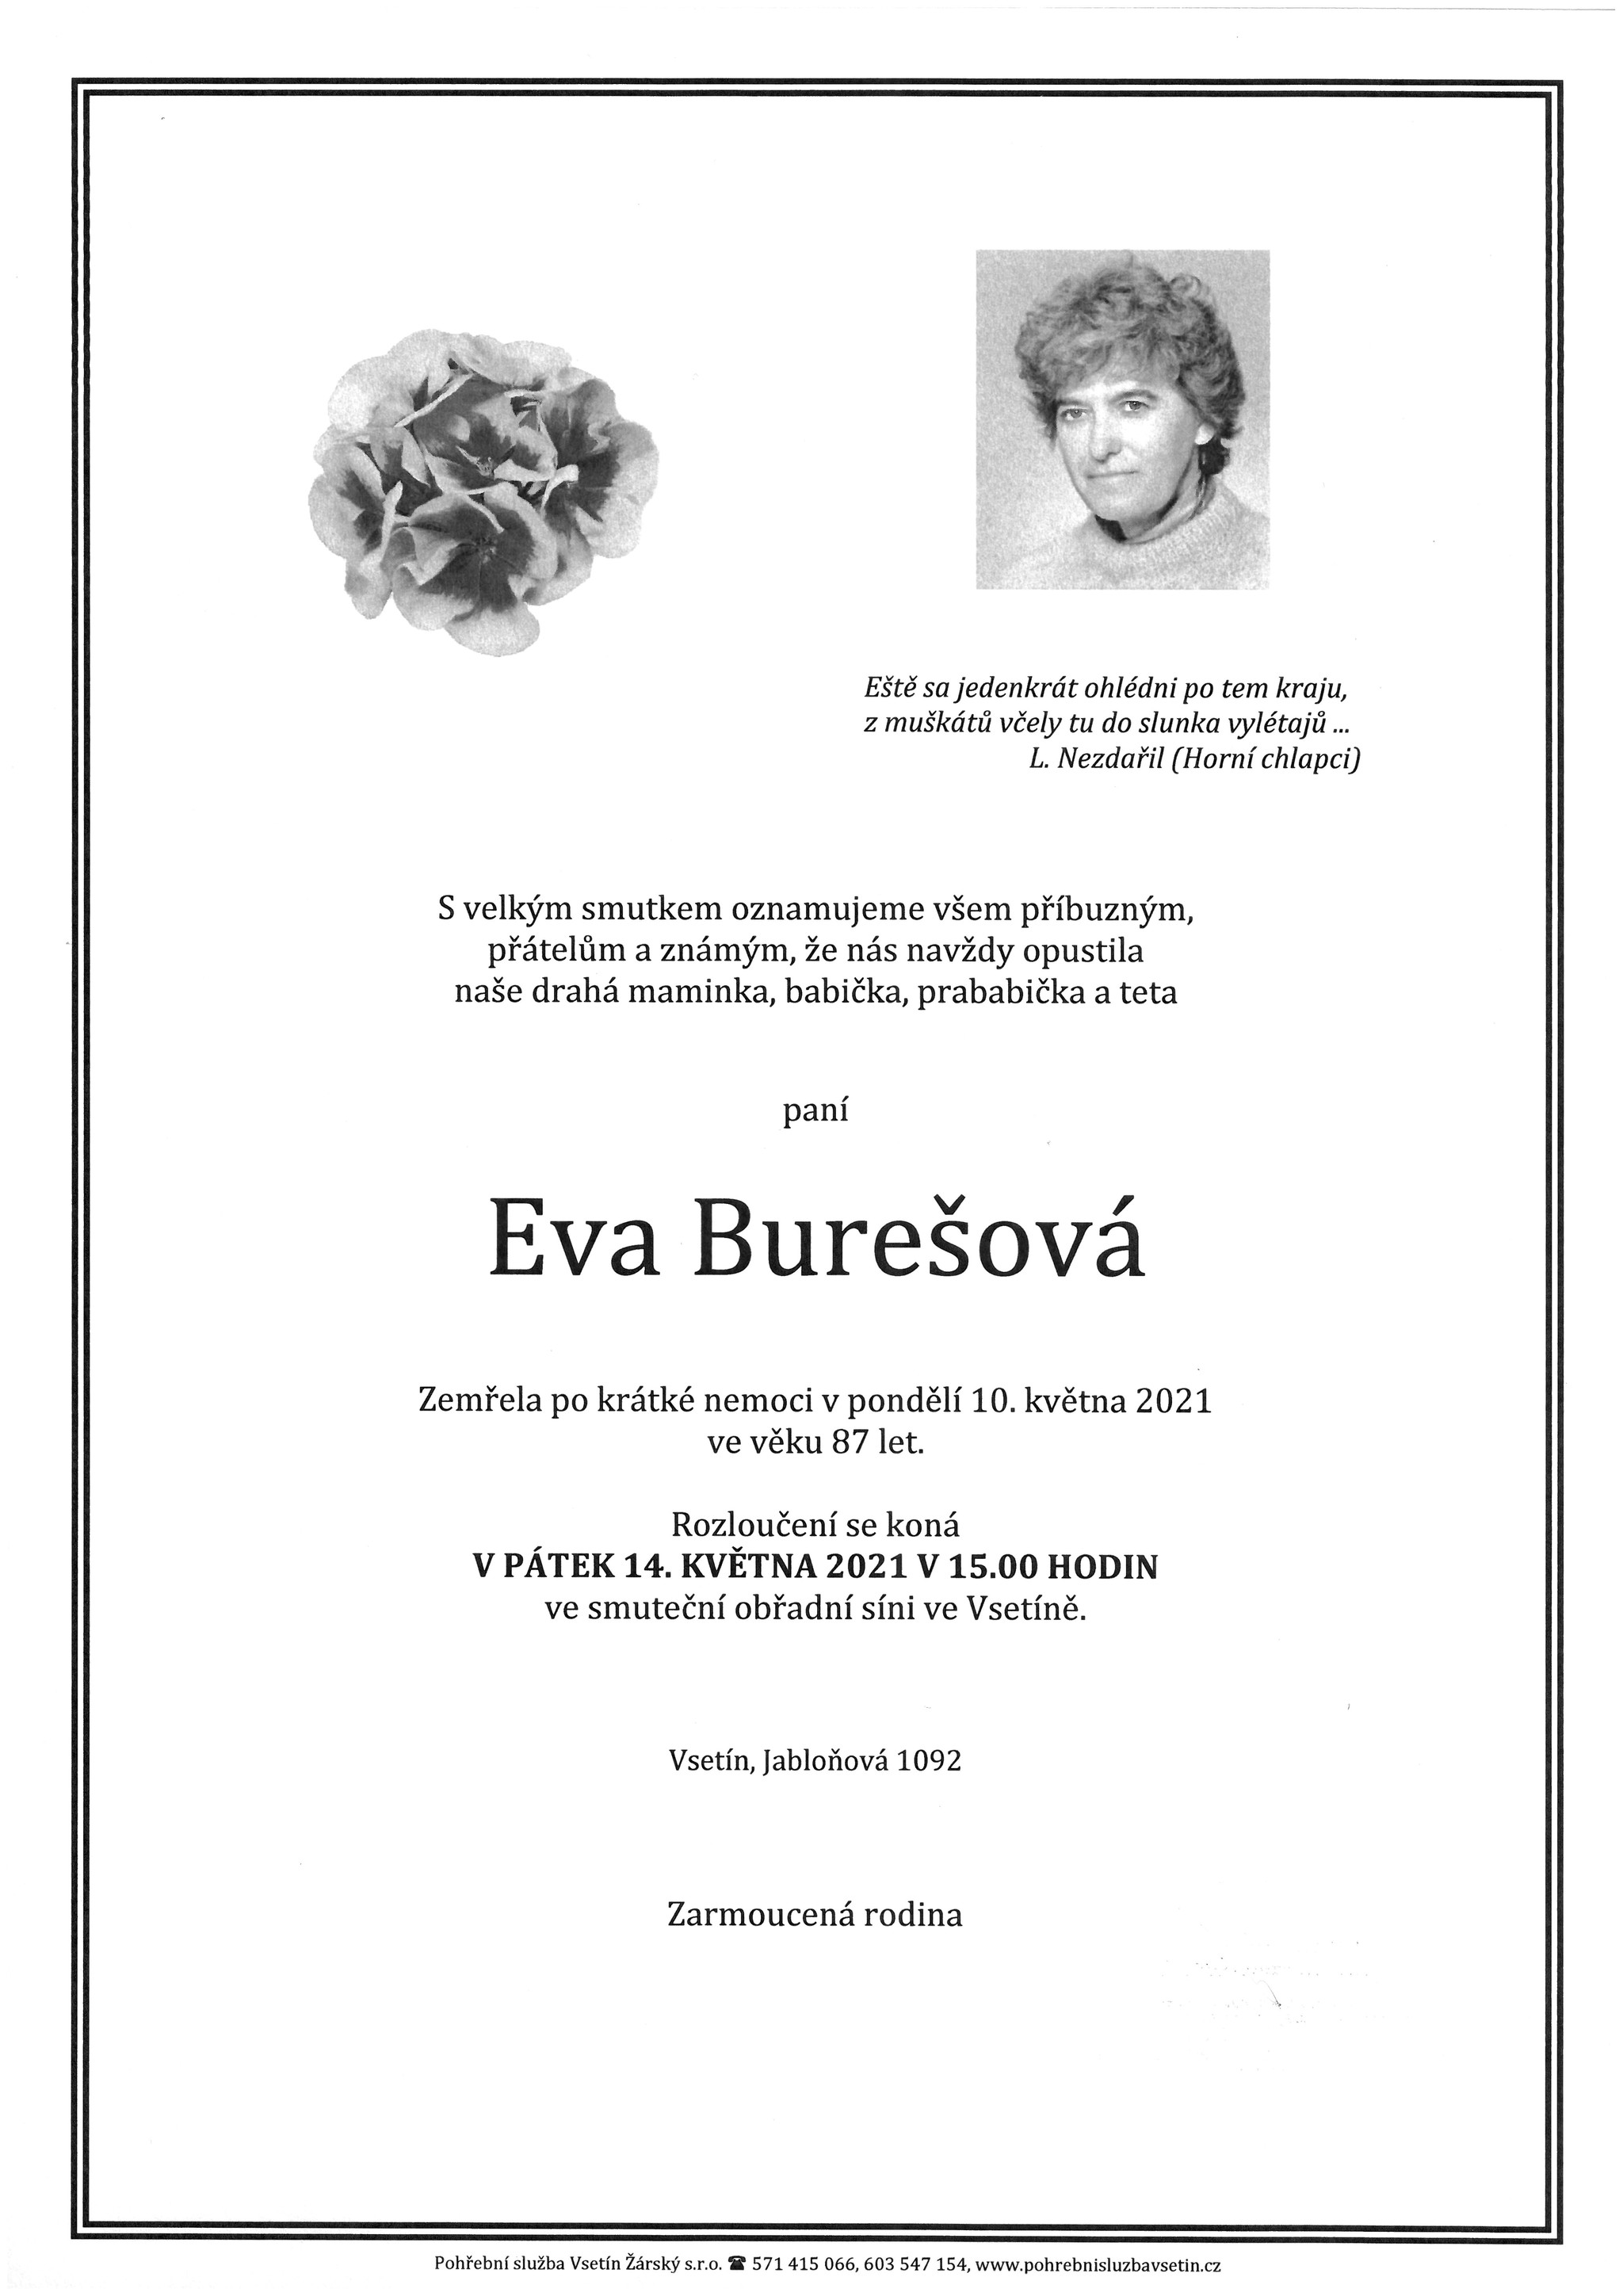 Eva Burešová